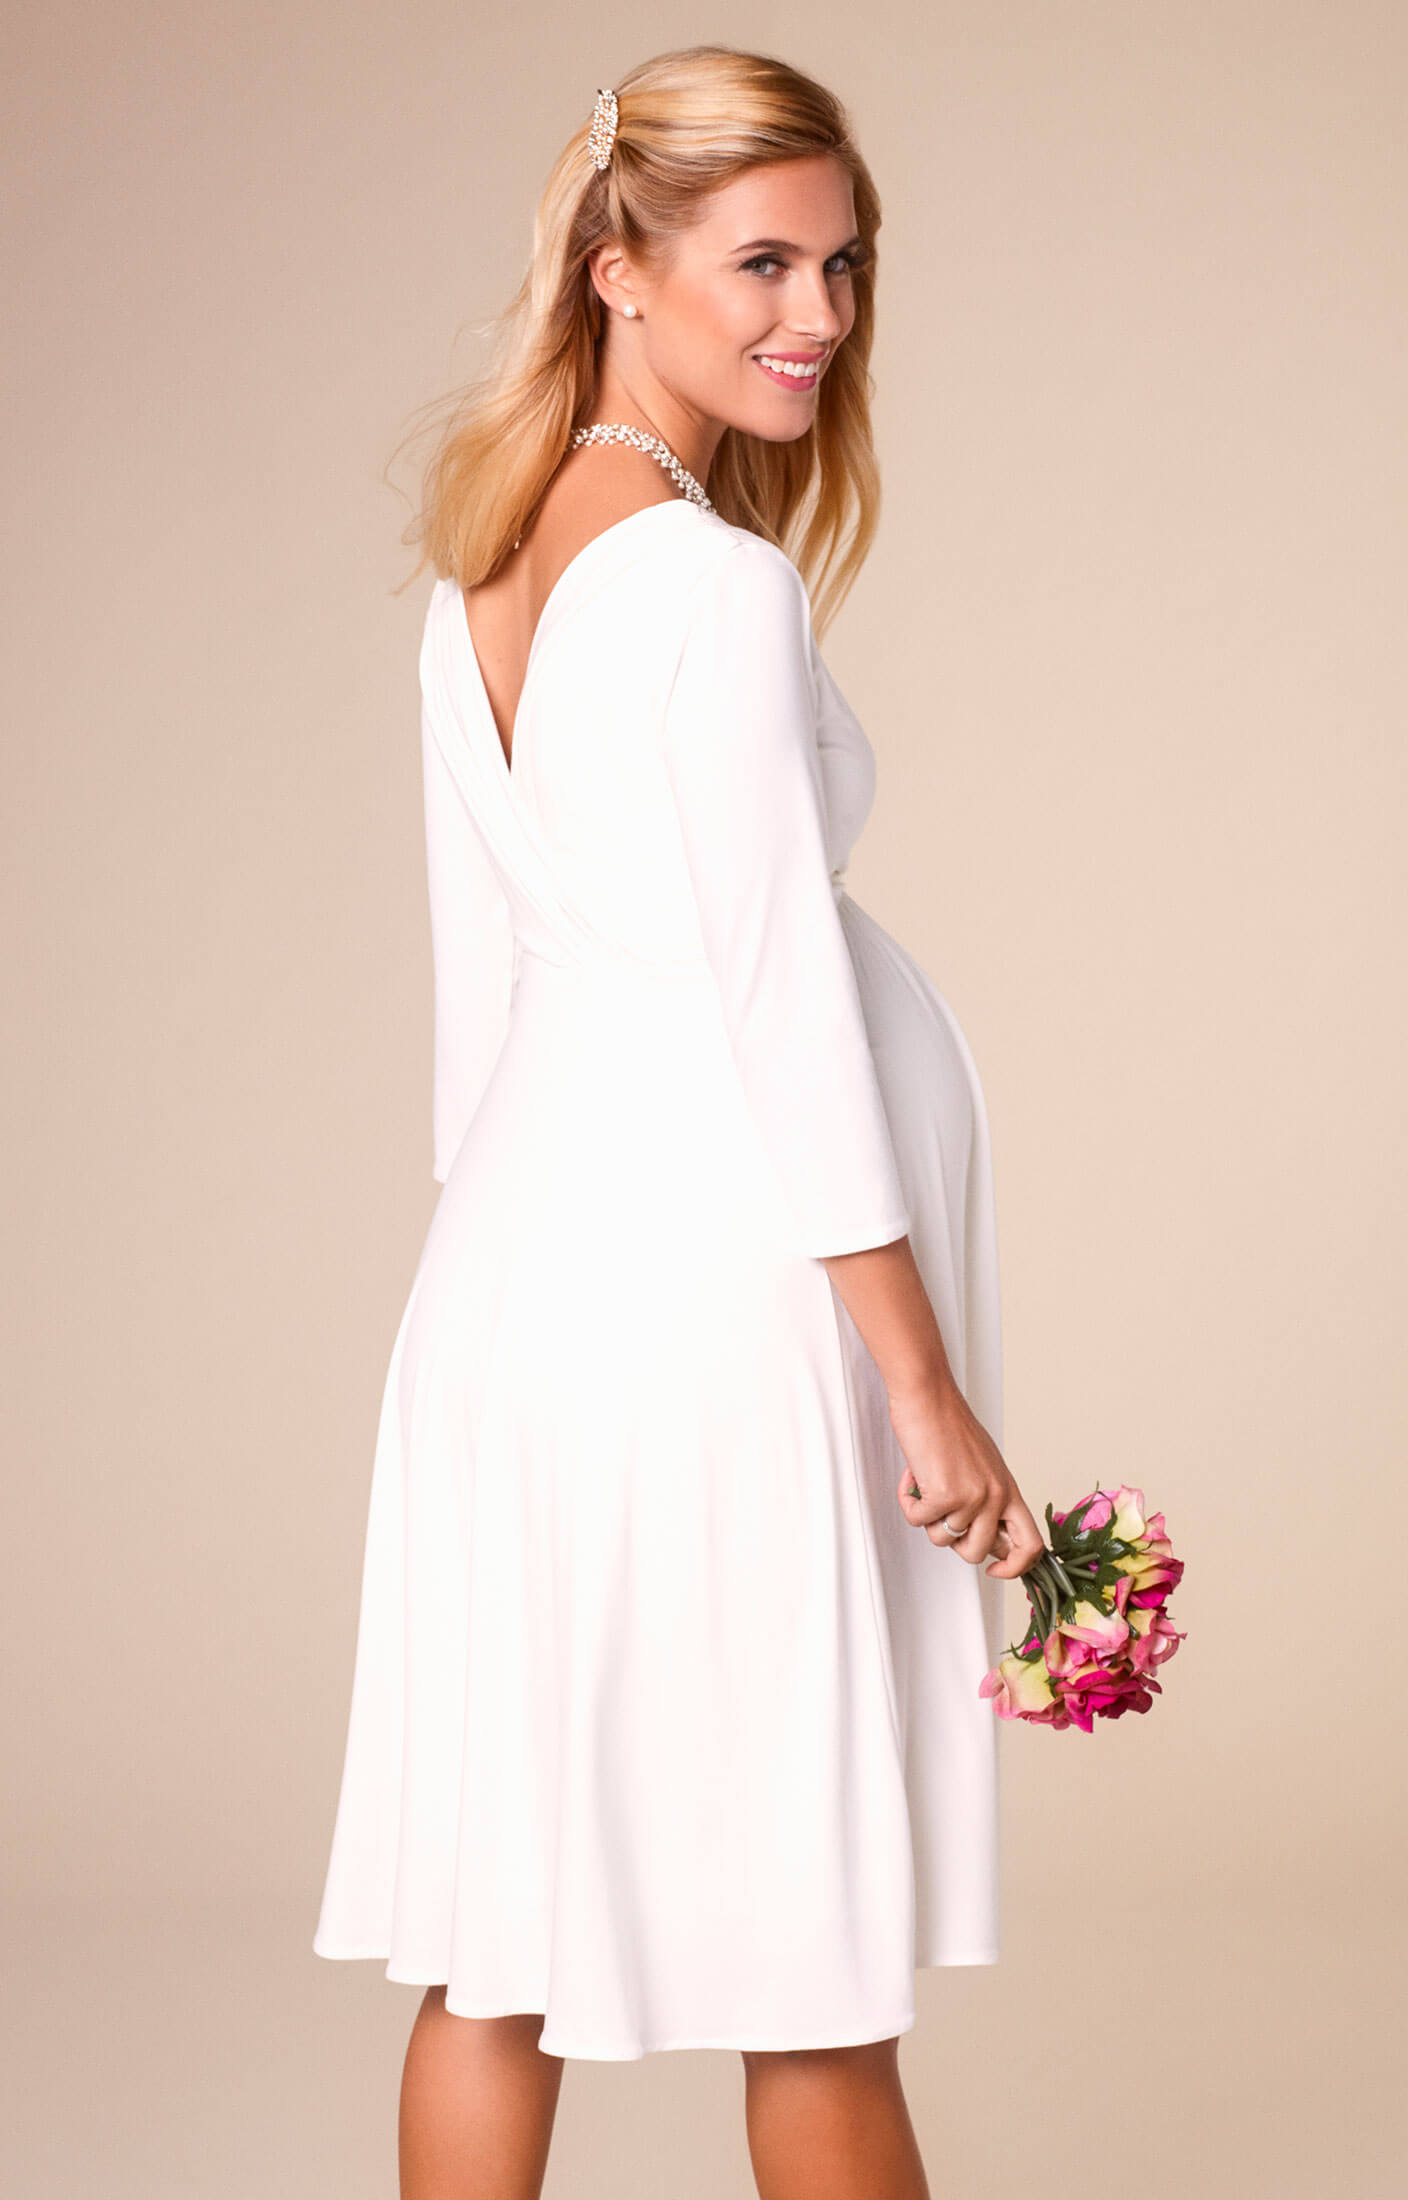 Tiffany Rose White Maternity & Nursing Dress Willow Ivory